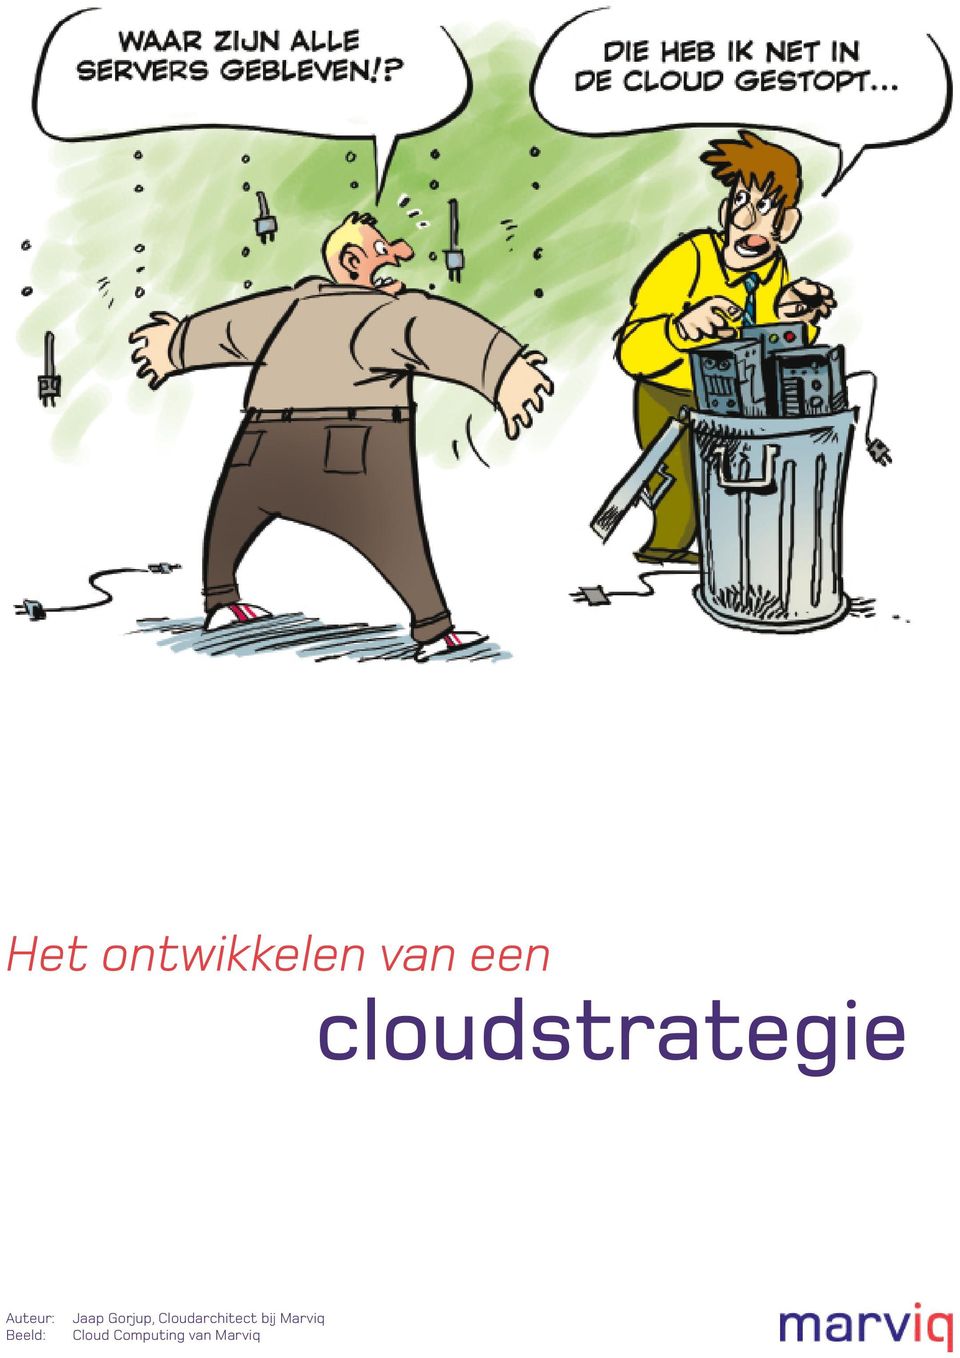 Jaap Gorjup, Cloudarchitect